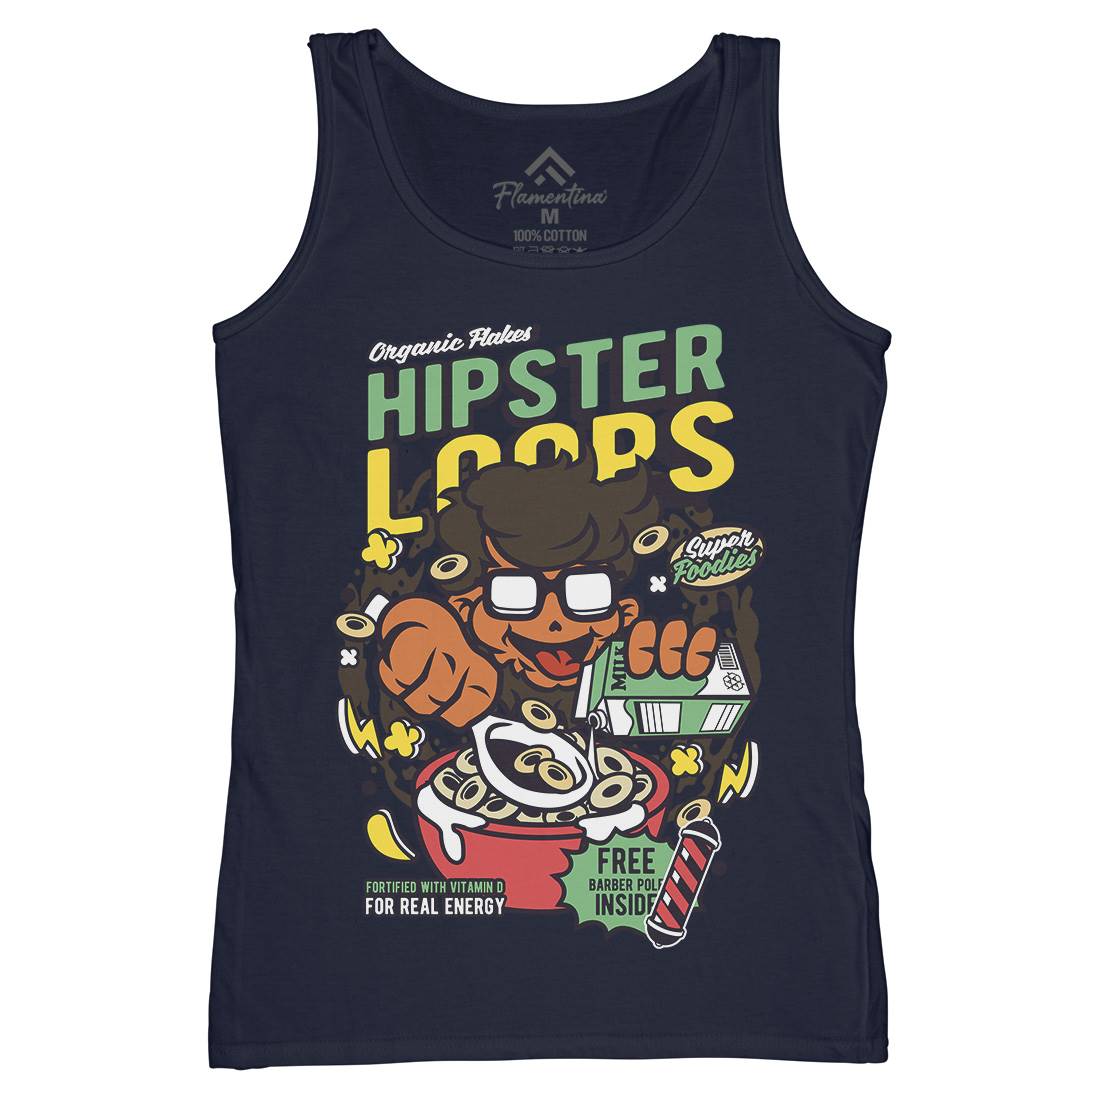 Hipster Loops Womens Organic Tank Top Vest Food C563